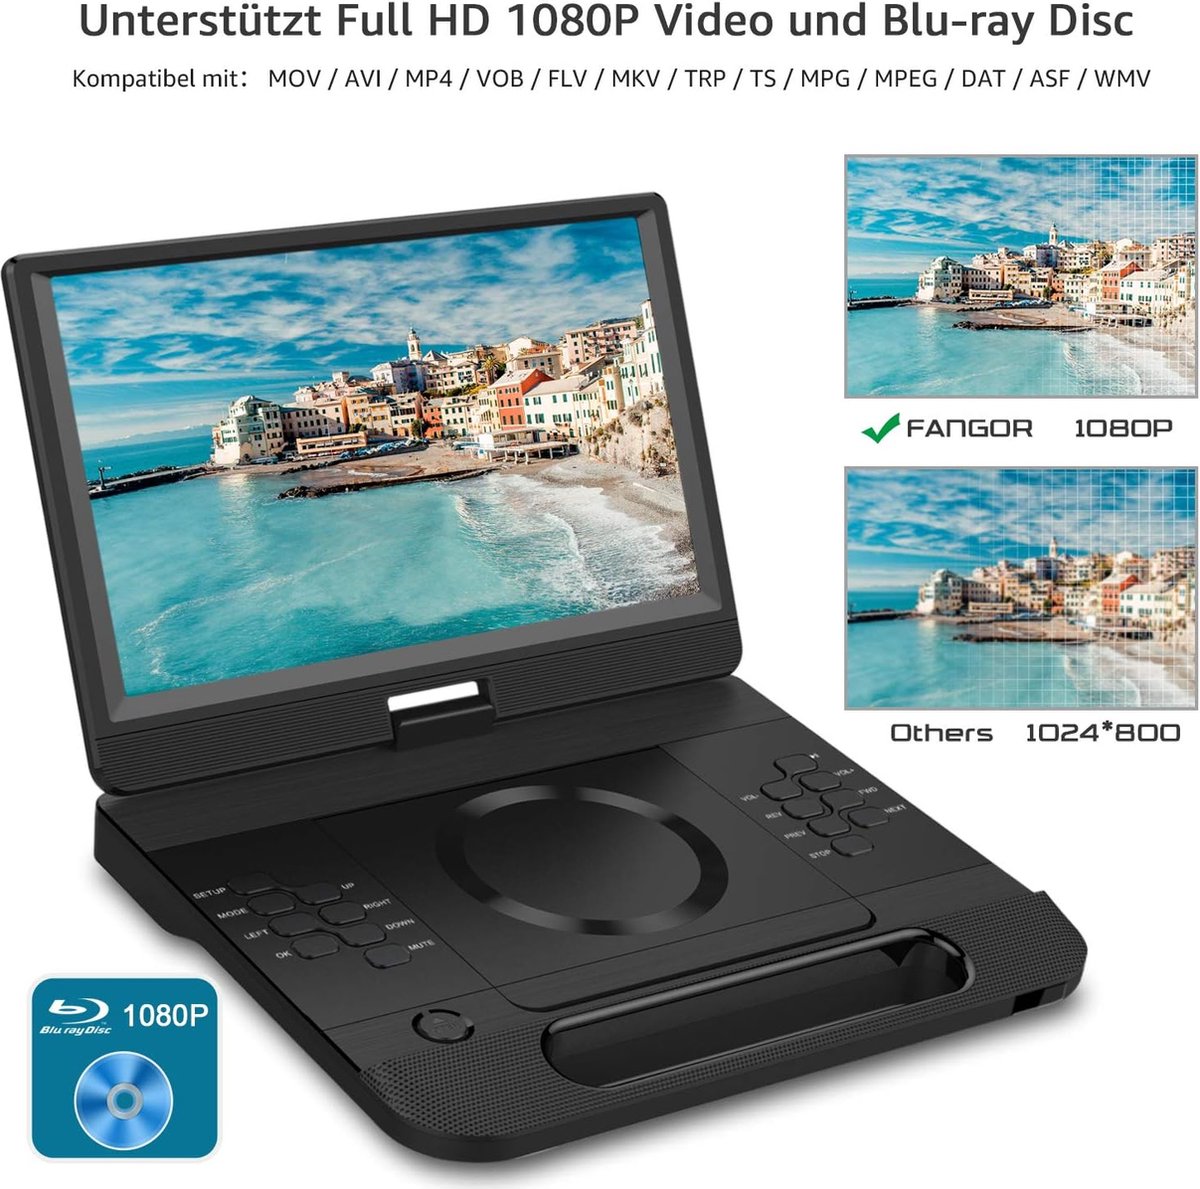 Lenco BRP-1150BK  Lenco BRP-1150BK Lecteur DVD/Blu-Ray portable